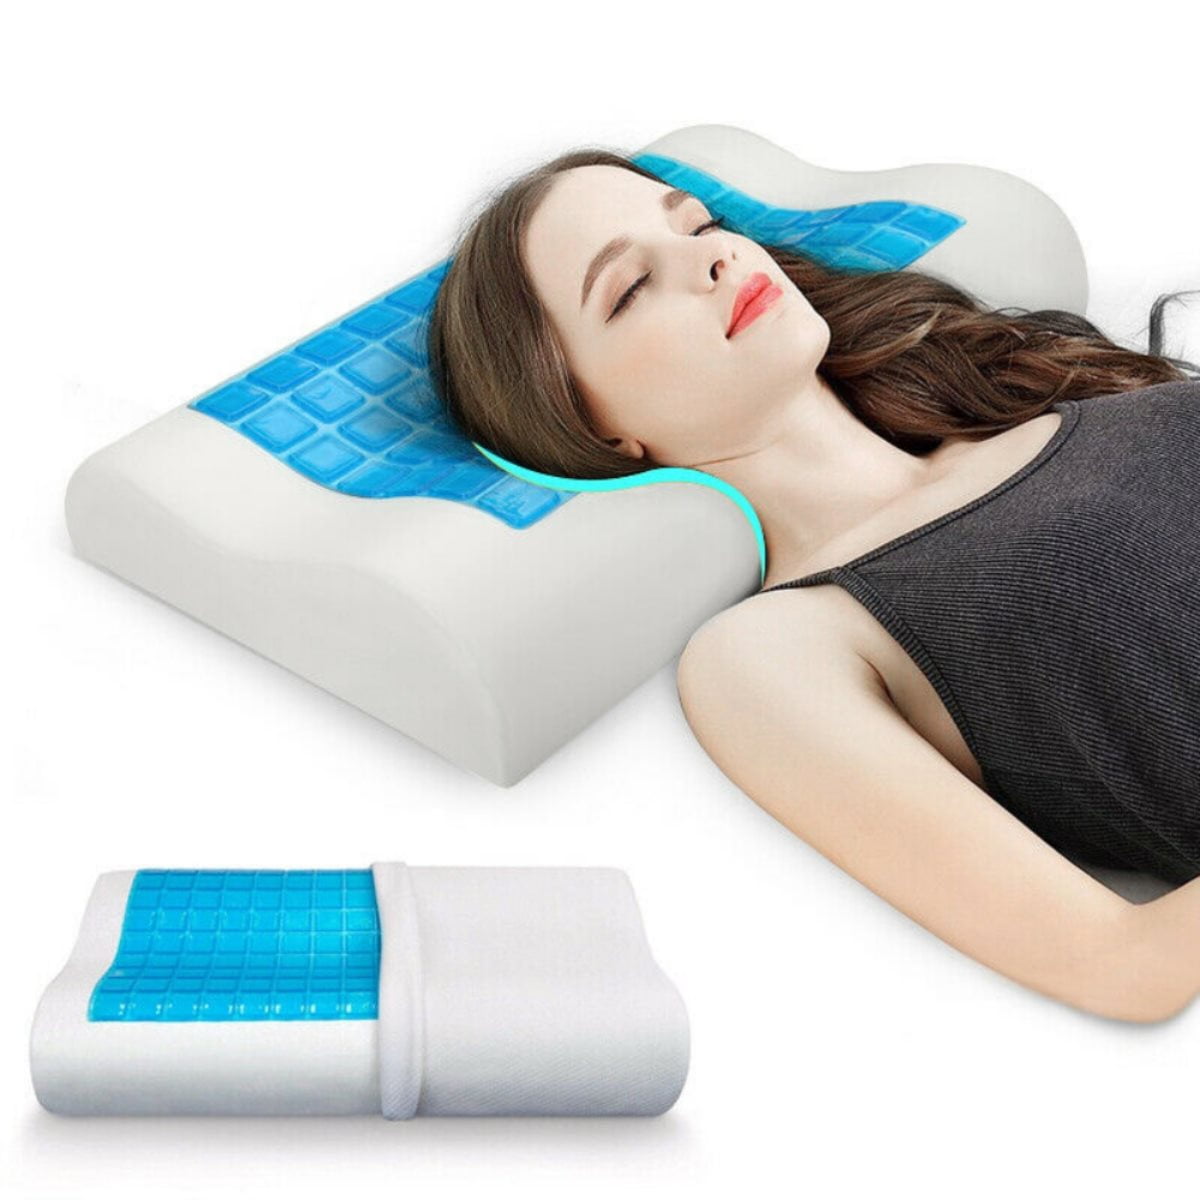 Hot X4E0 Details about   Summer Cooling Pillow Relaxing Restful Sleep Natural W2R2 Gel Comfort 